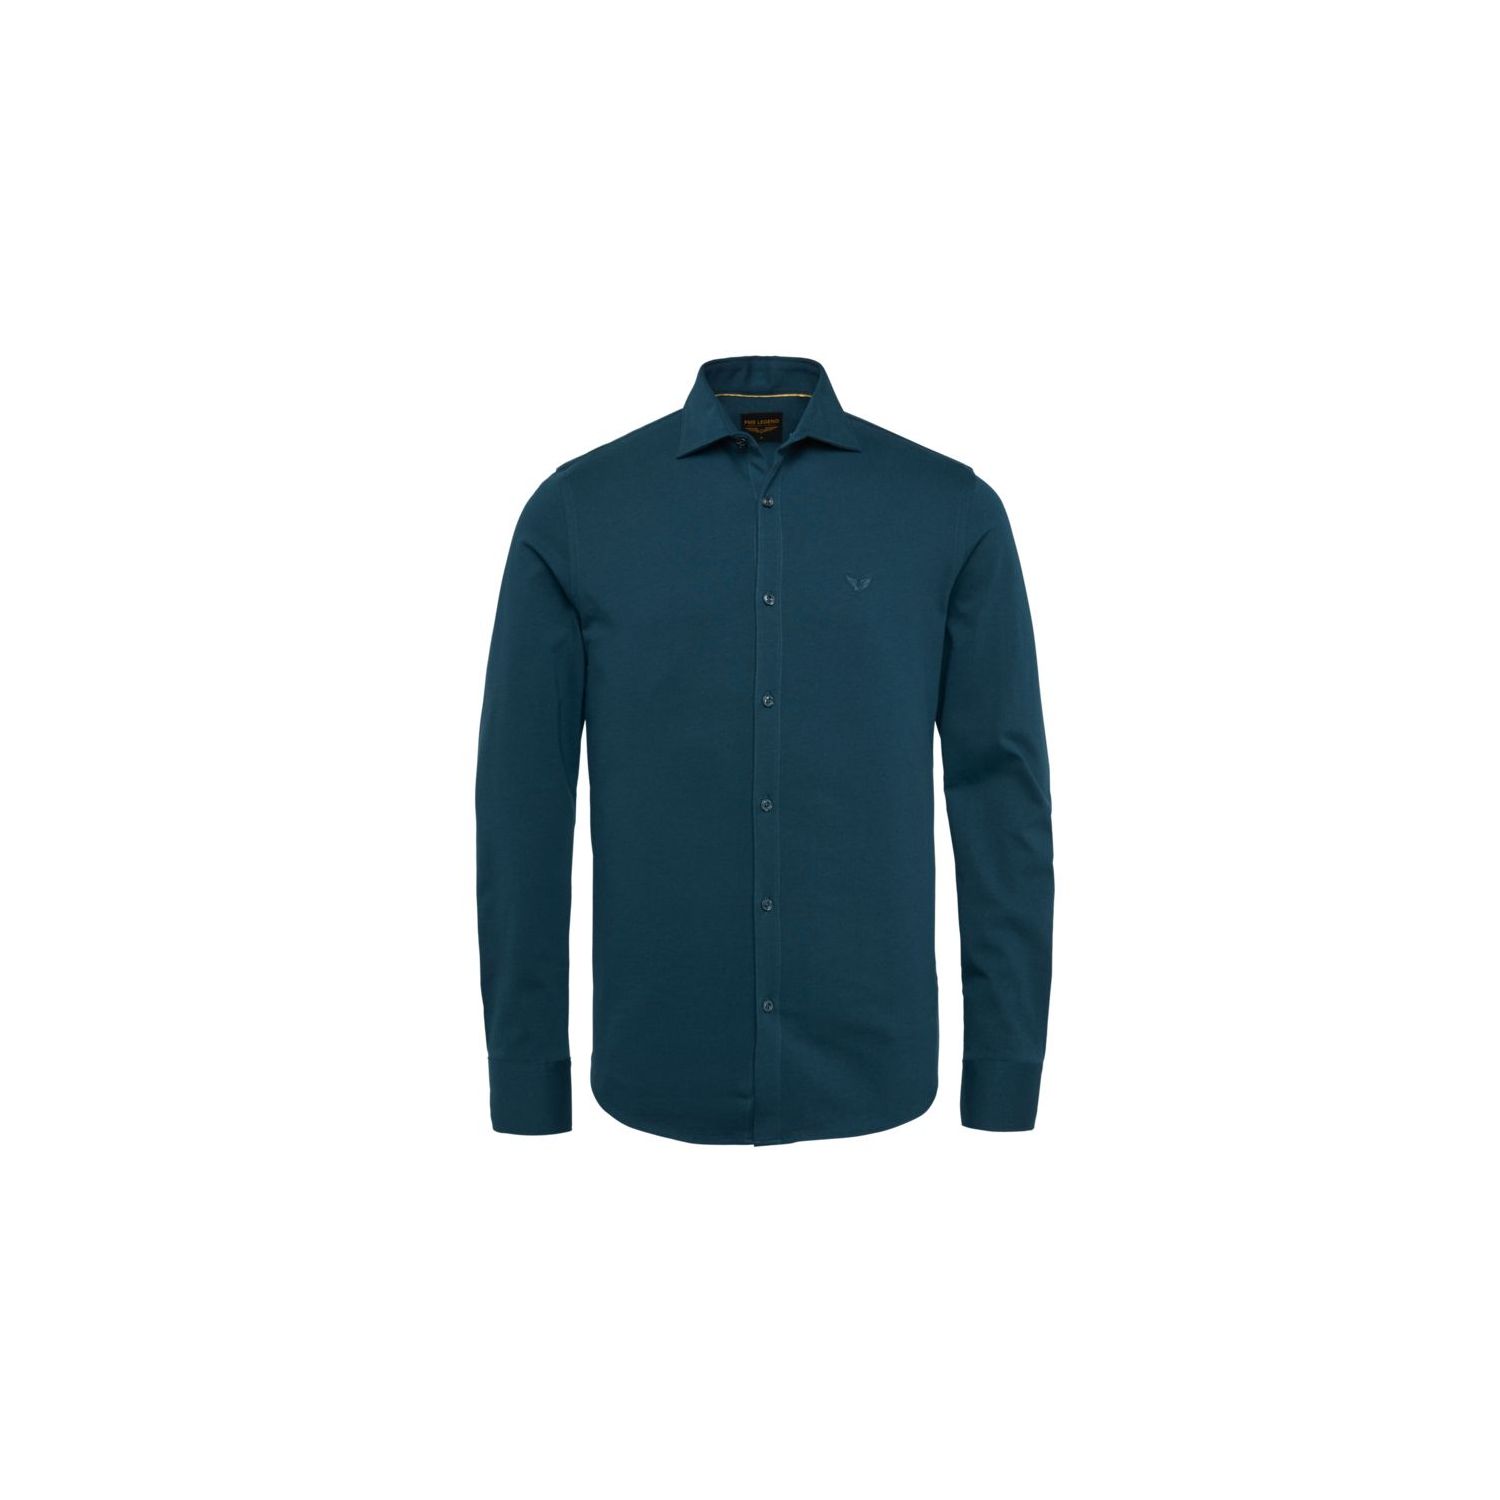 PME Legend shirt cotton single jersey navy blazer